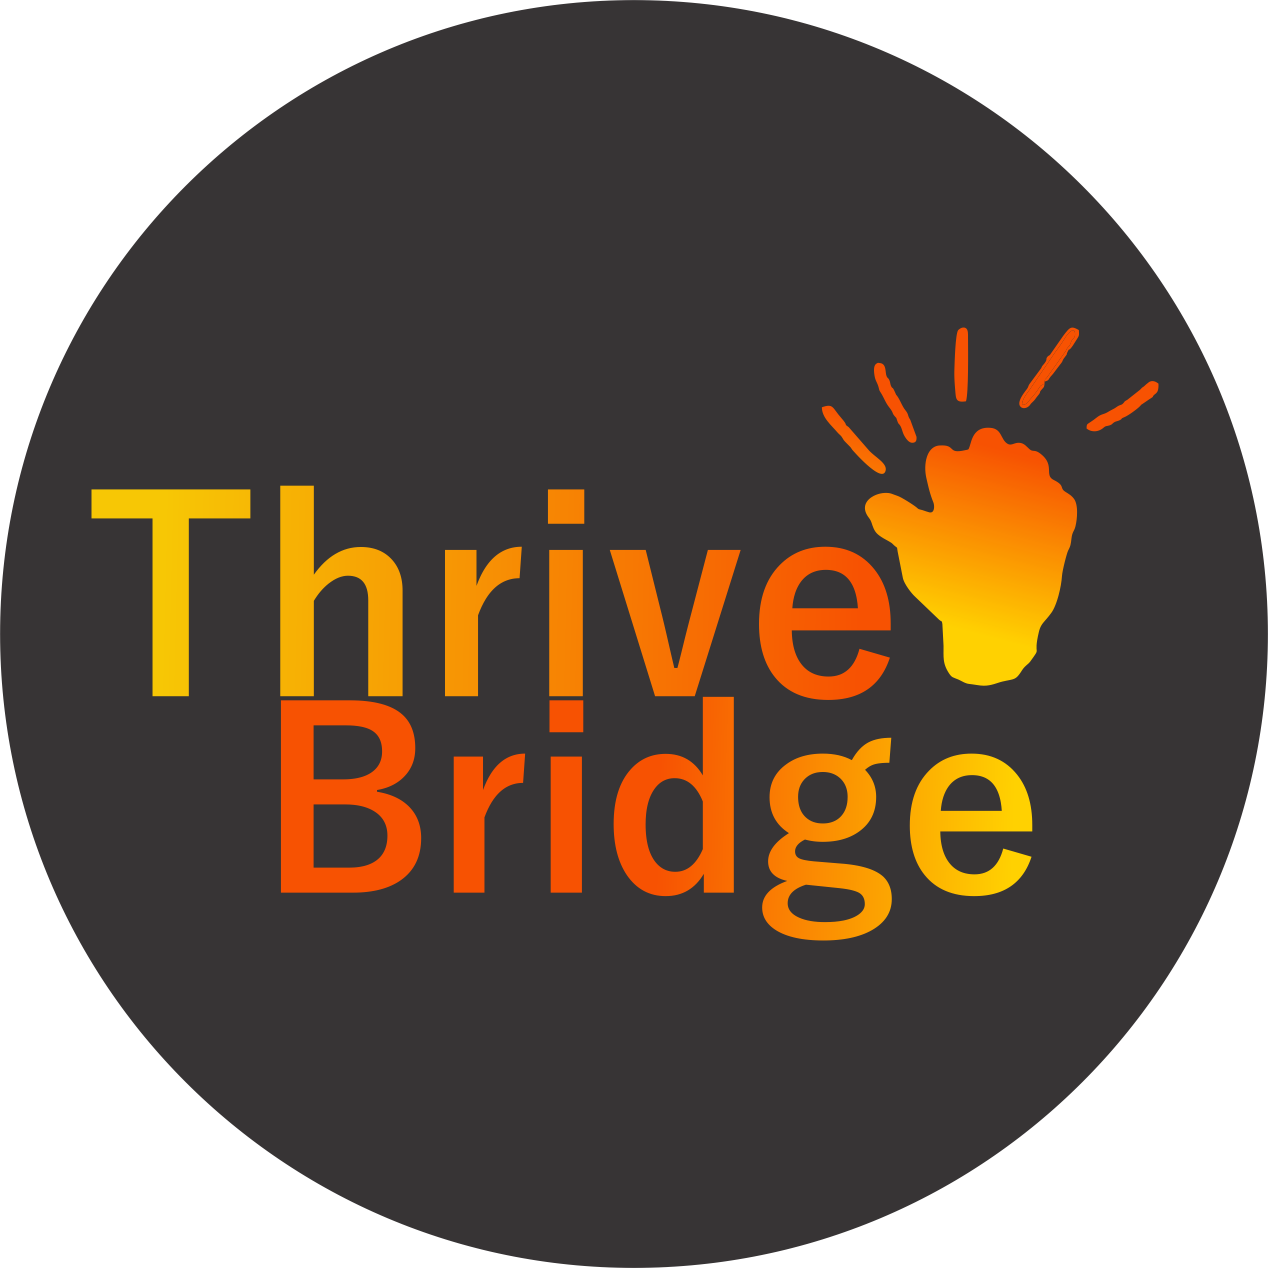 Thrivebridge Initiative for Social Development